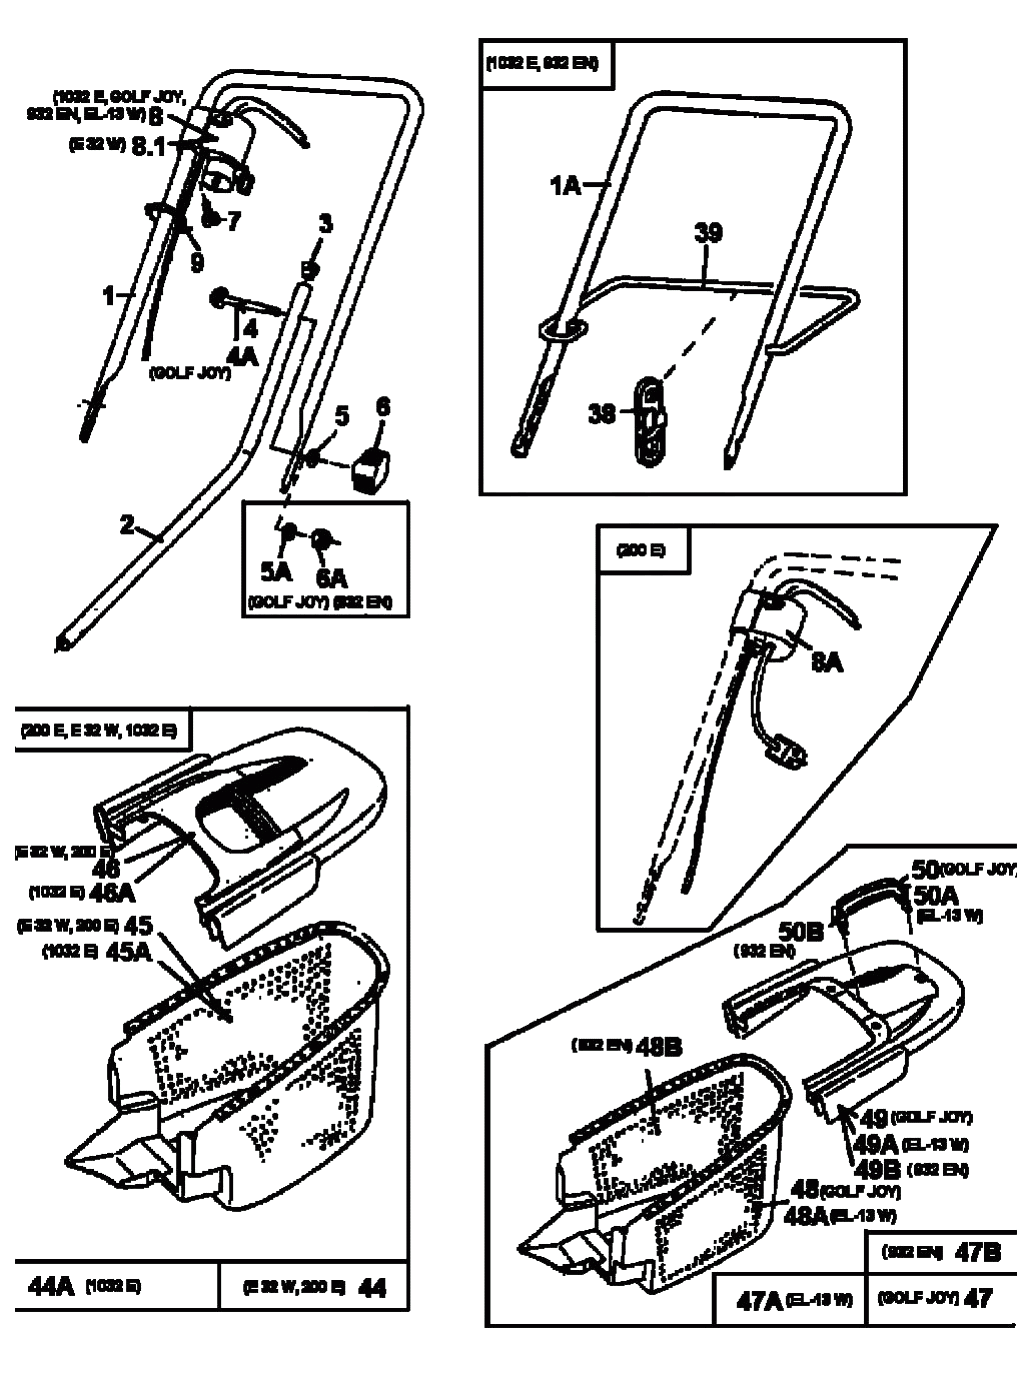 MTD Артикул 18B-C3D-678 (год выпуска 1999). Травосборник, ручка